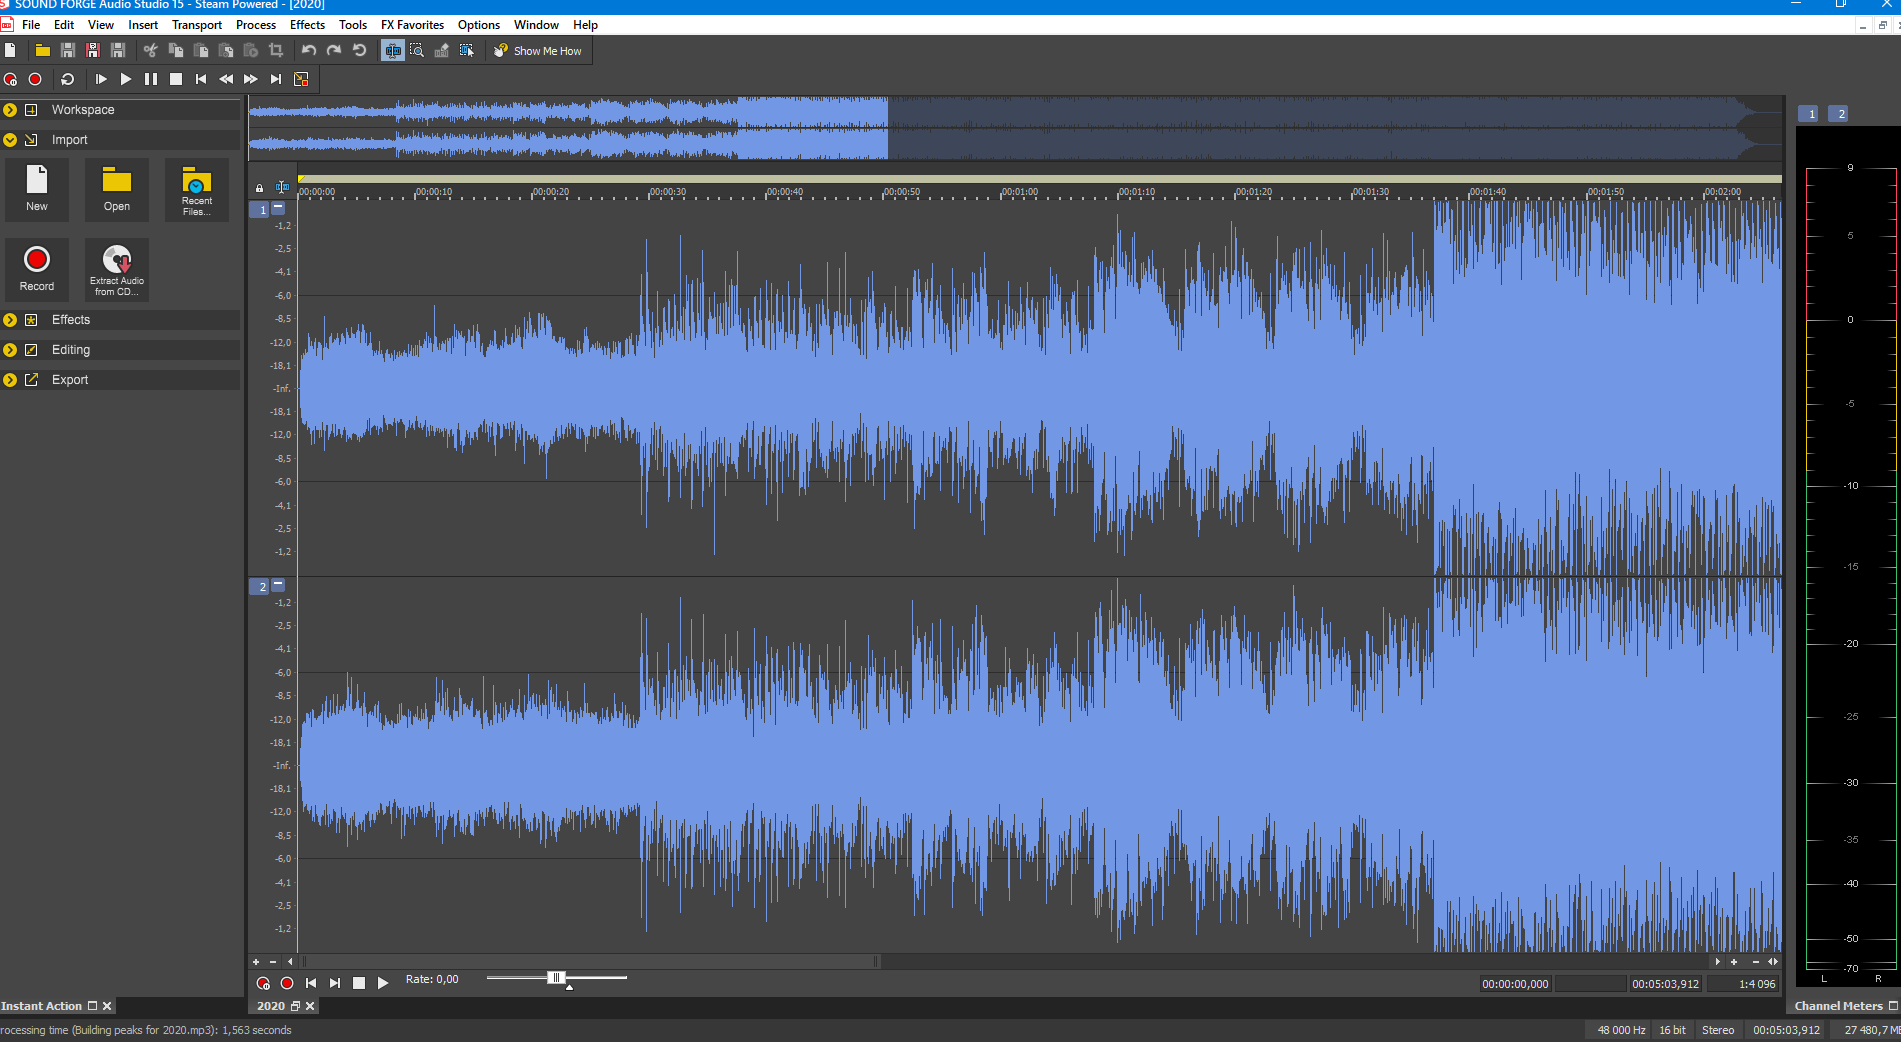 download the last version for ipod MAGIX Sound Forge Audio Studio Pro 17.0.2.109